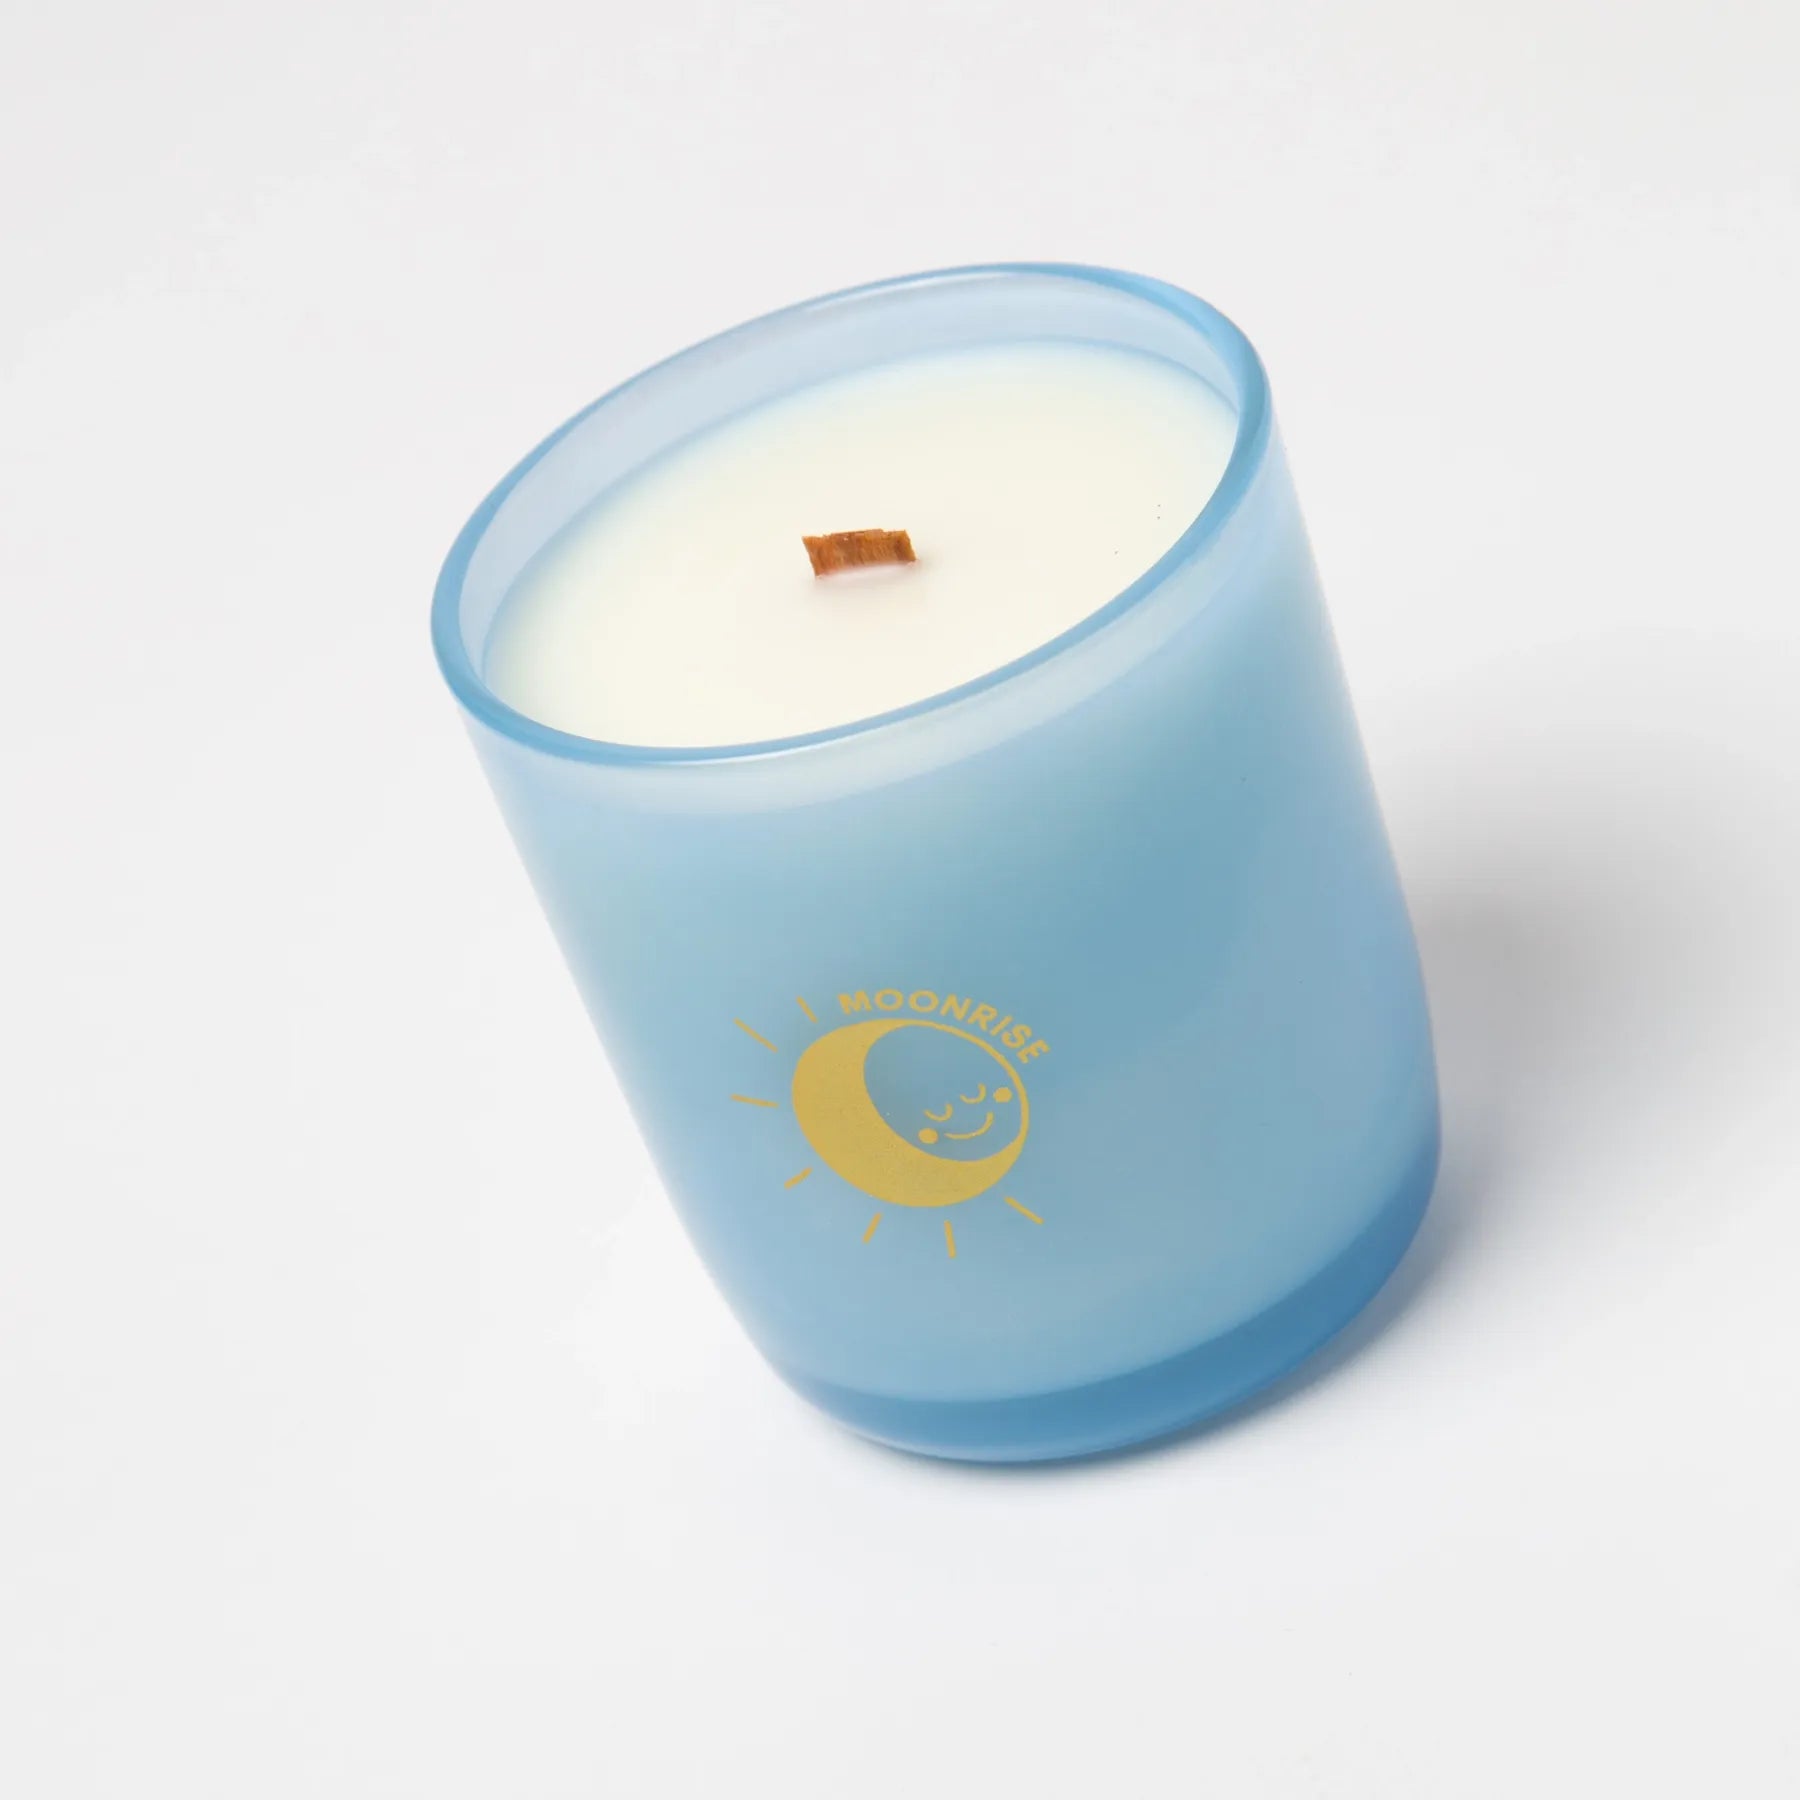 milk jar candle - moonrise